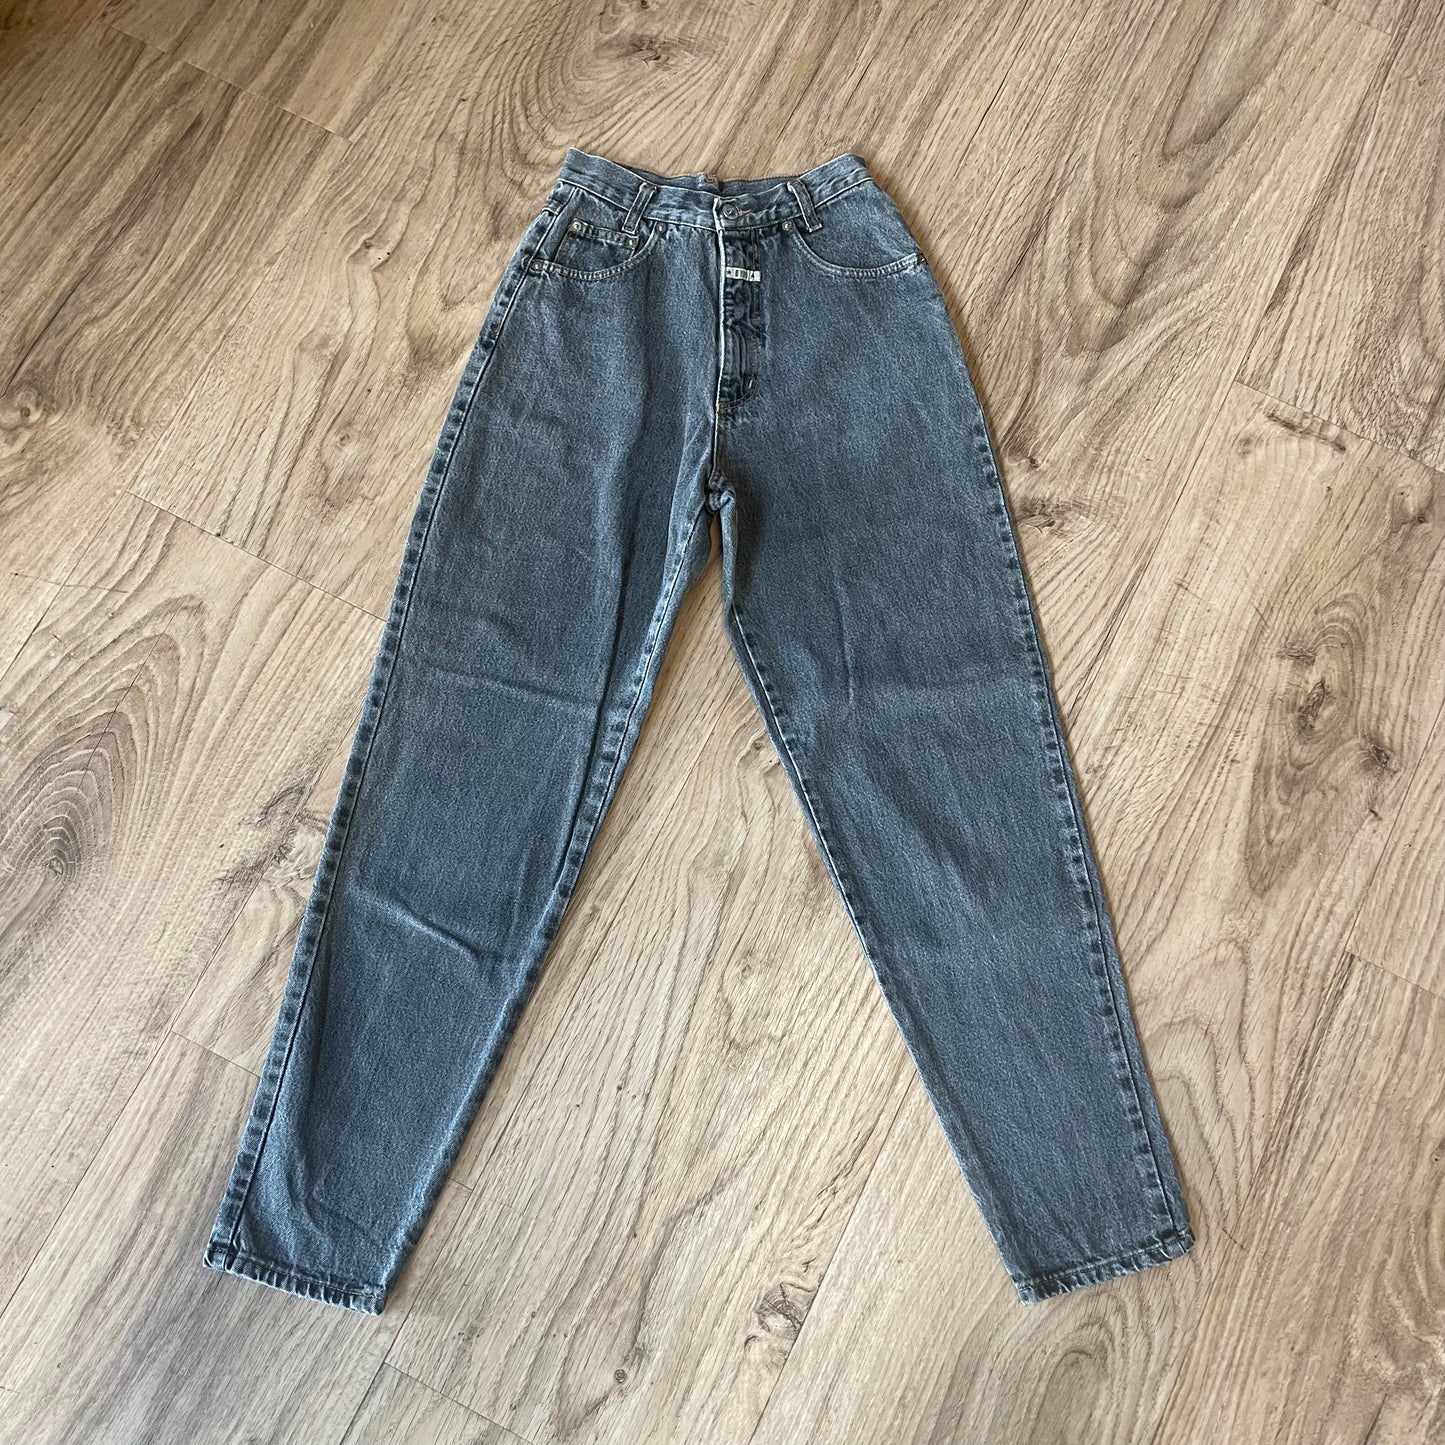 Grey mom jeans